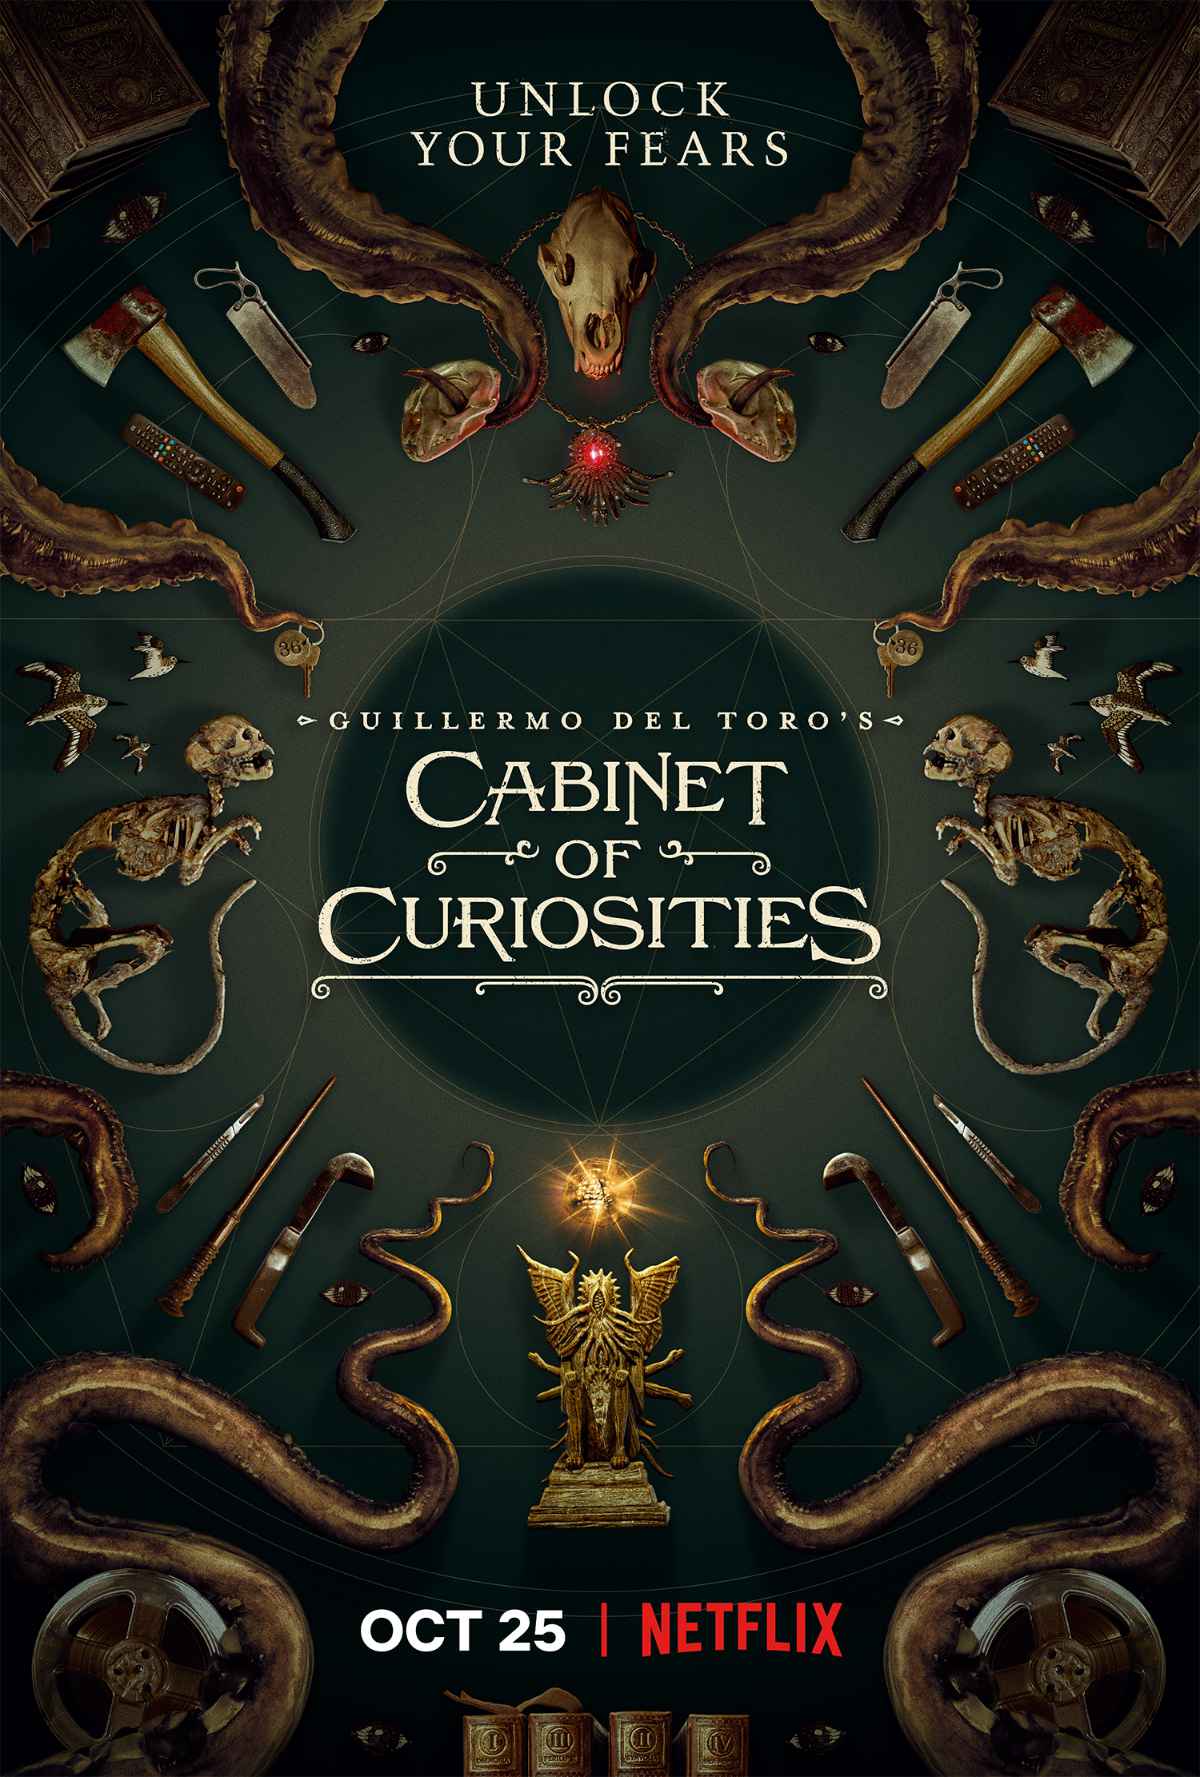 Guillermo del Toro's Cabinet of Curiosities Trailer